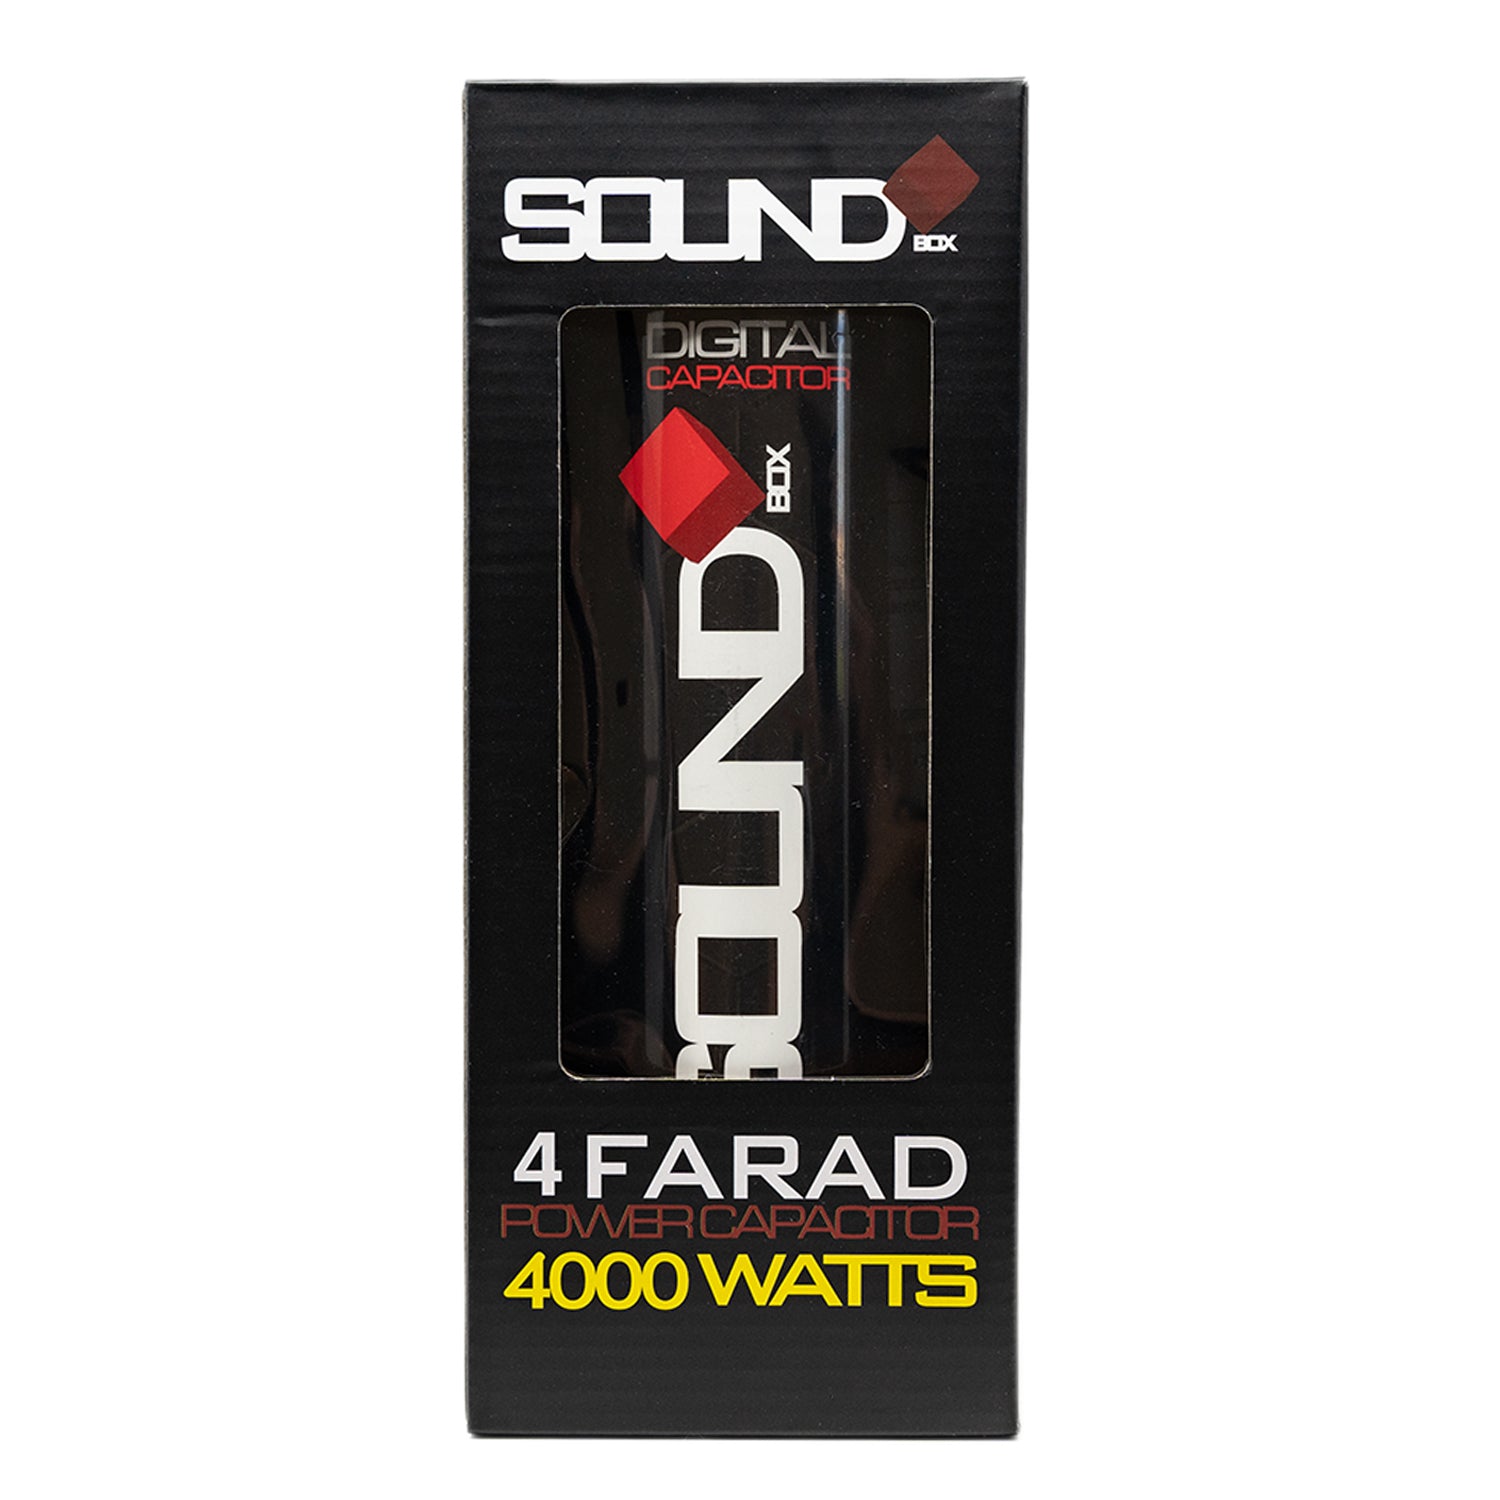 SoundBox SCAP4D, 4 Farad Digital Capacitor w/ Distribution Top